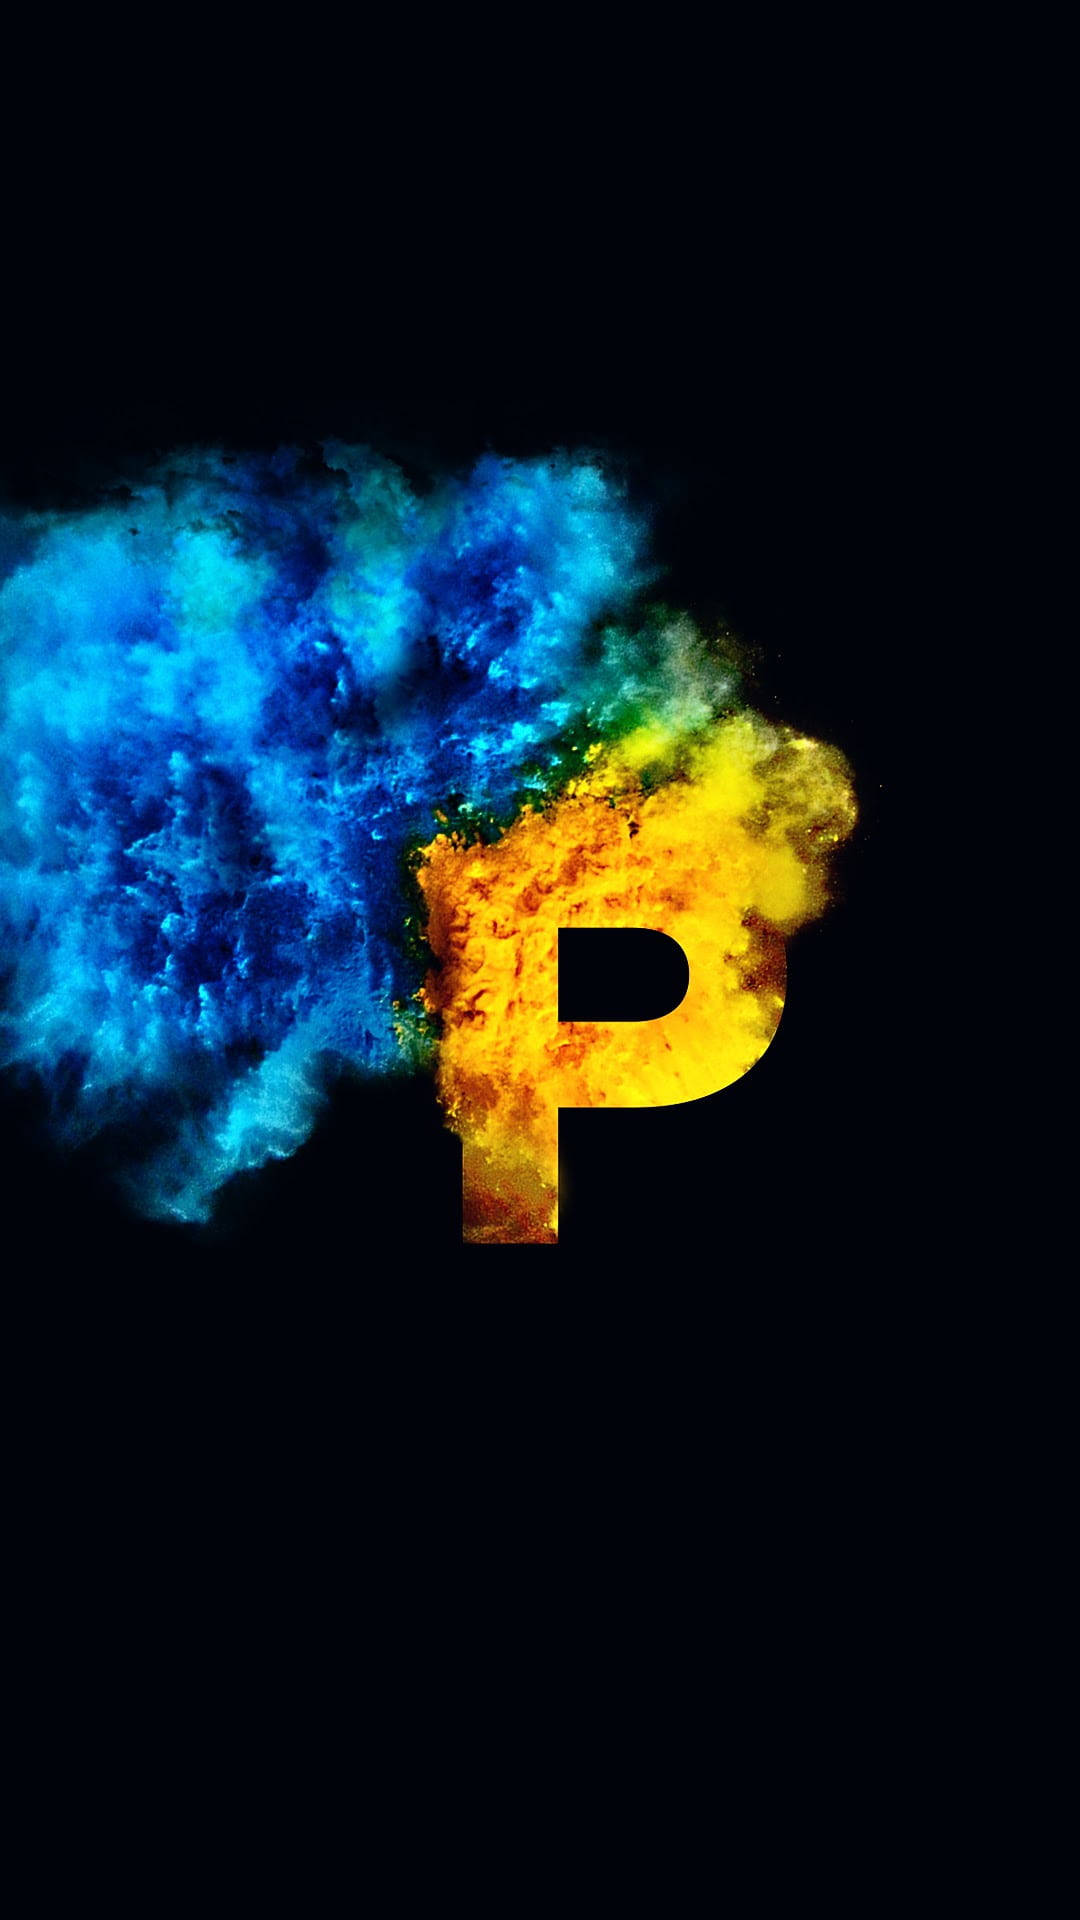 P Letter With Smoke Splash